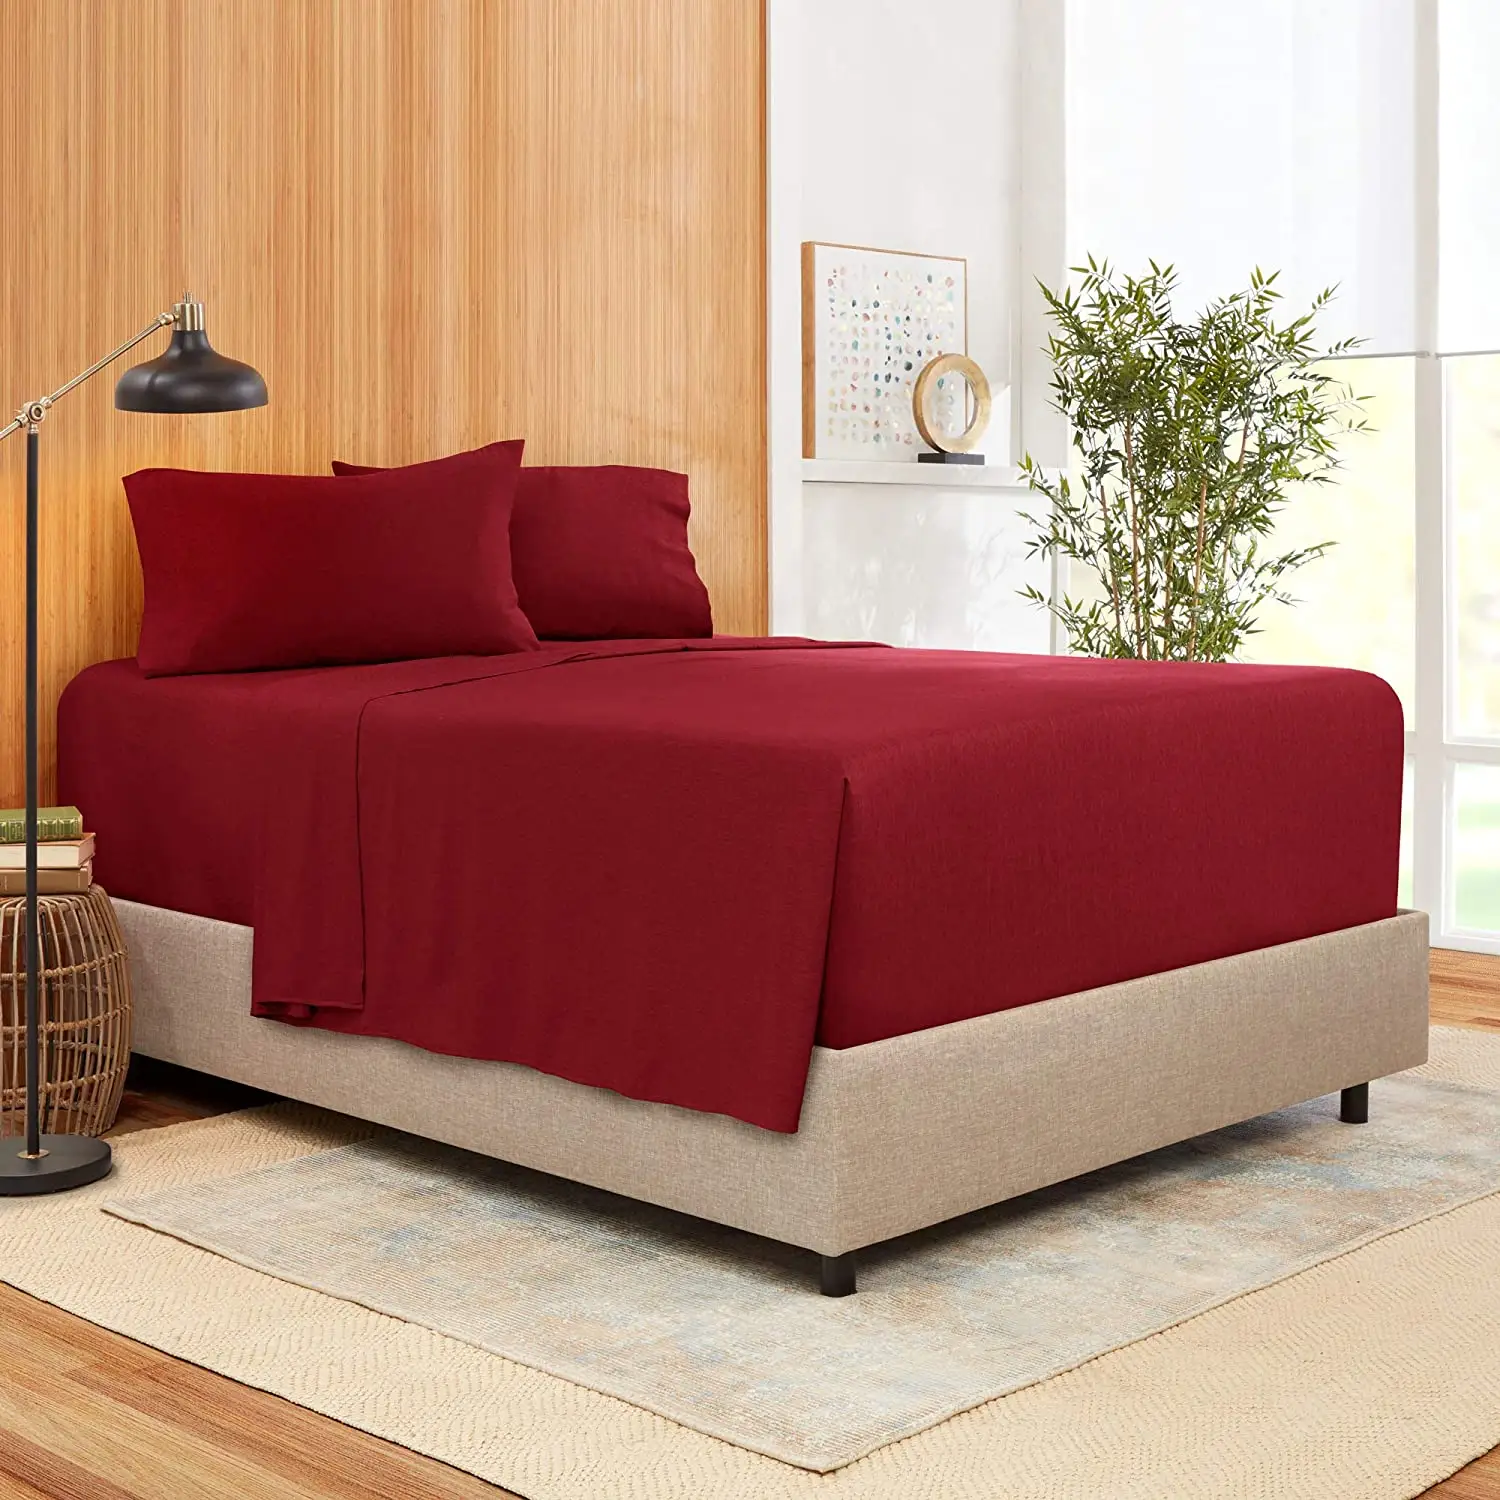 Sabanas ชุดเครื่องนอน Juegos De Sabana,ชุดเครื่องนอนสำหรับออกแบบผ้าปูที่นอนขนาดคิงไซส์แบบออนไลน์ผ้าปูเตียงขนาดพอดีตัว3มิติ